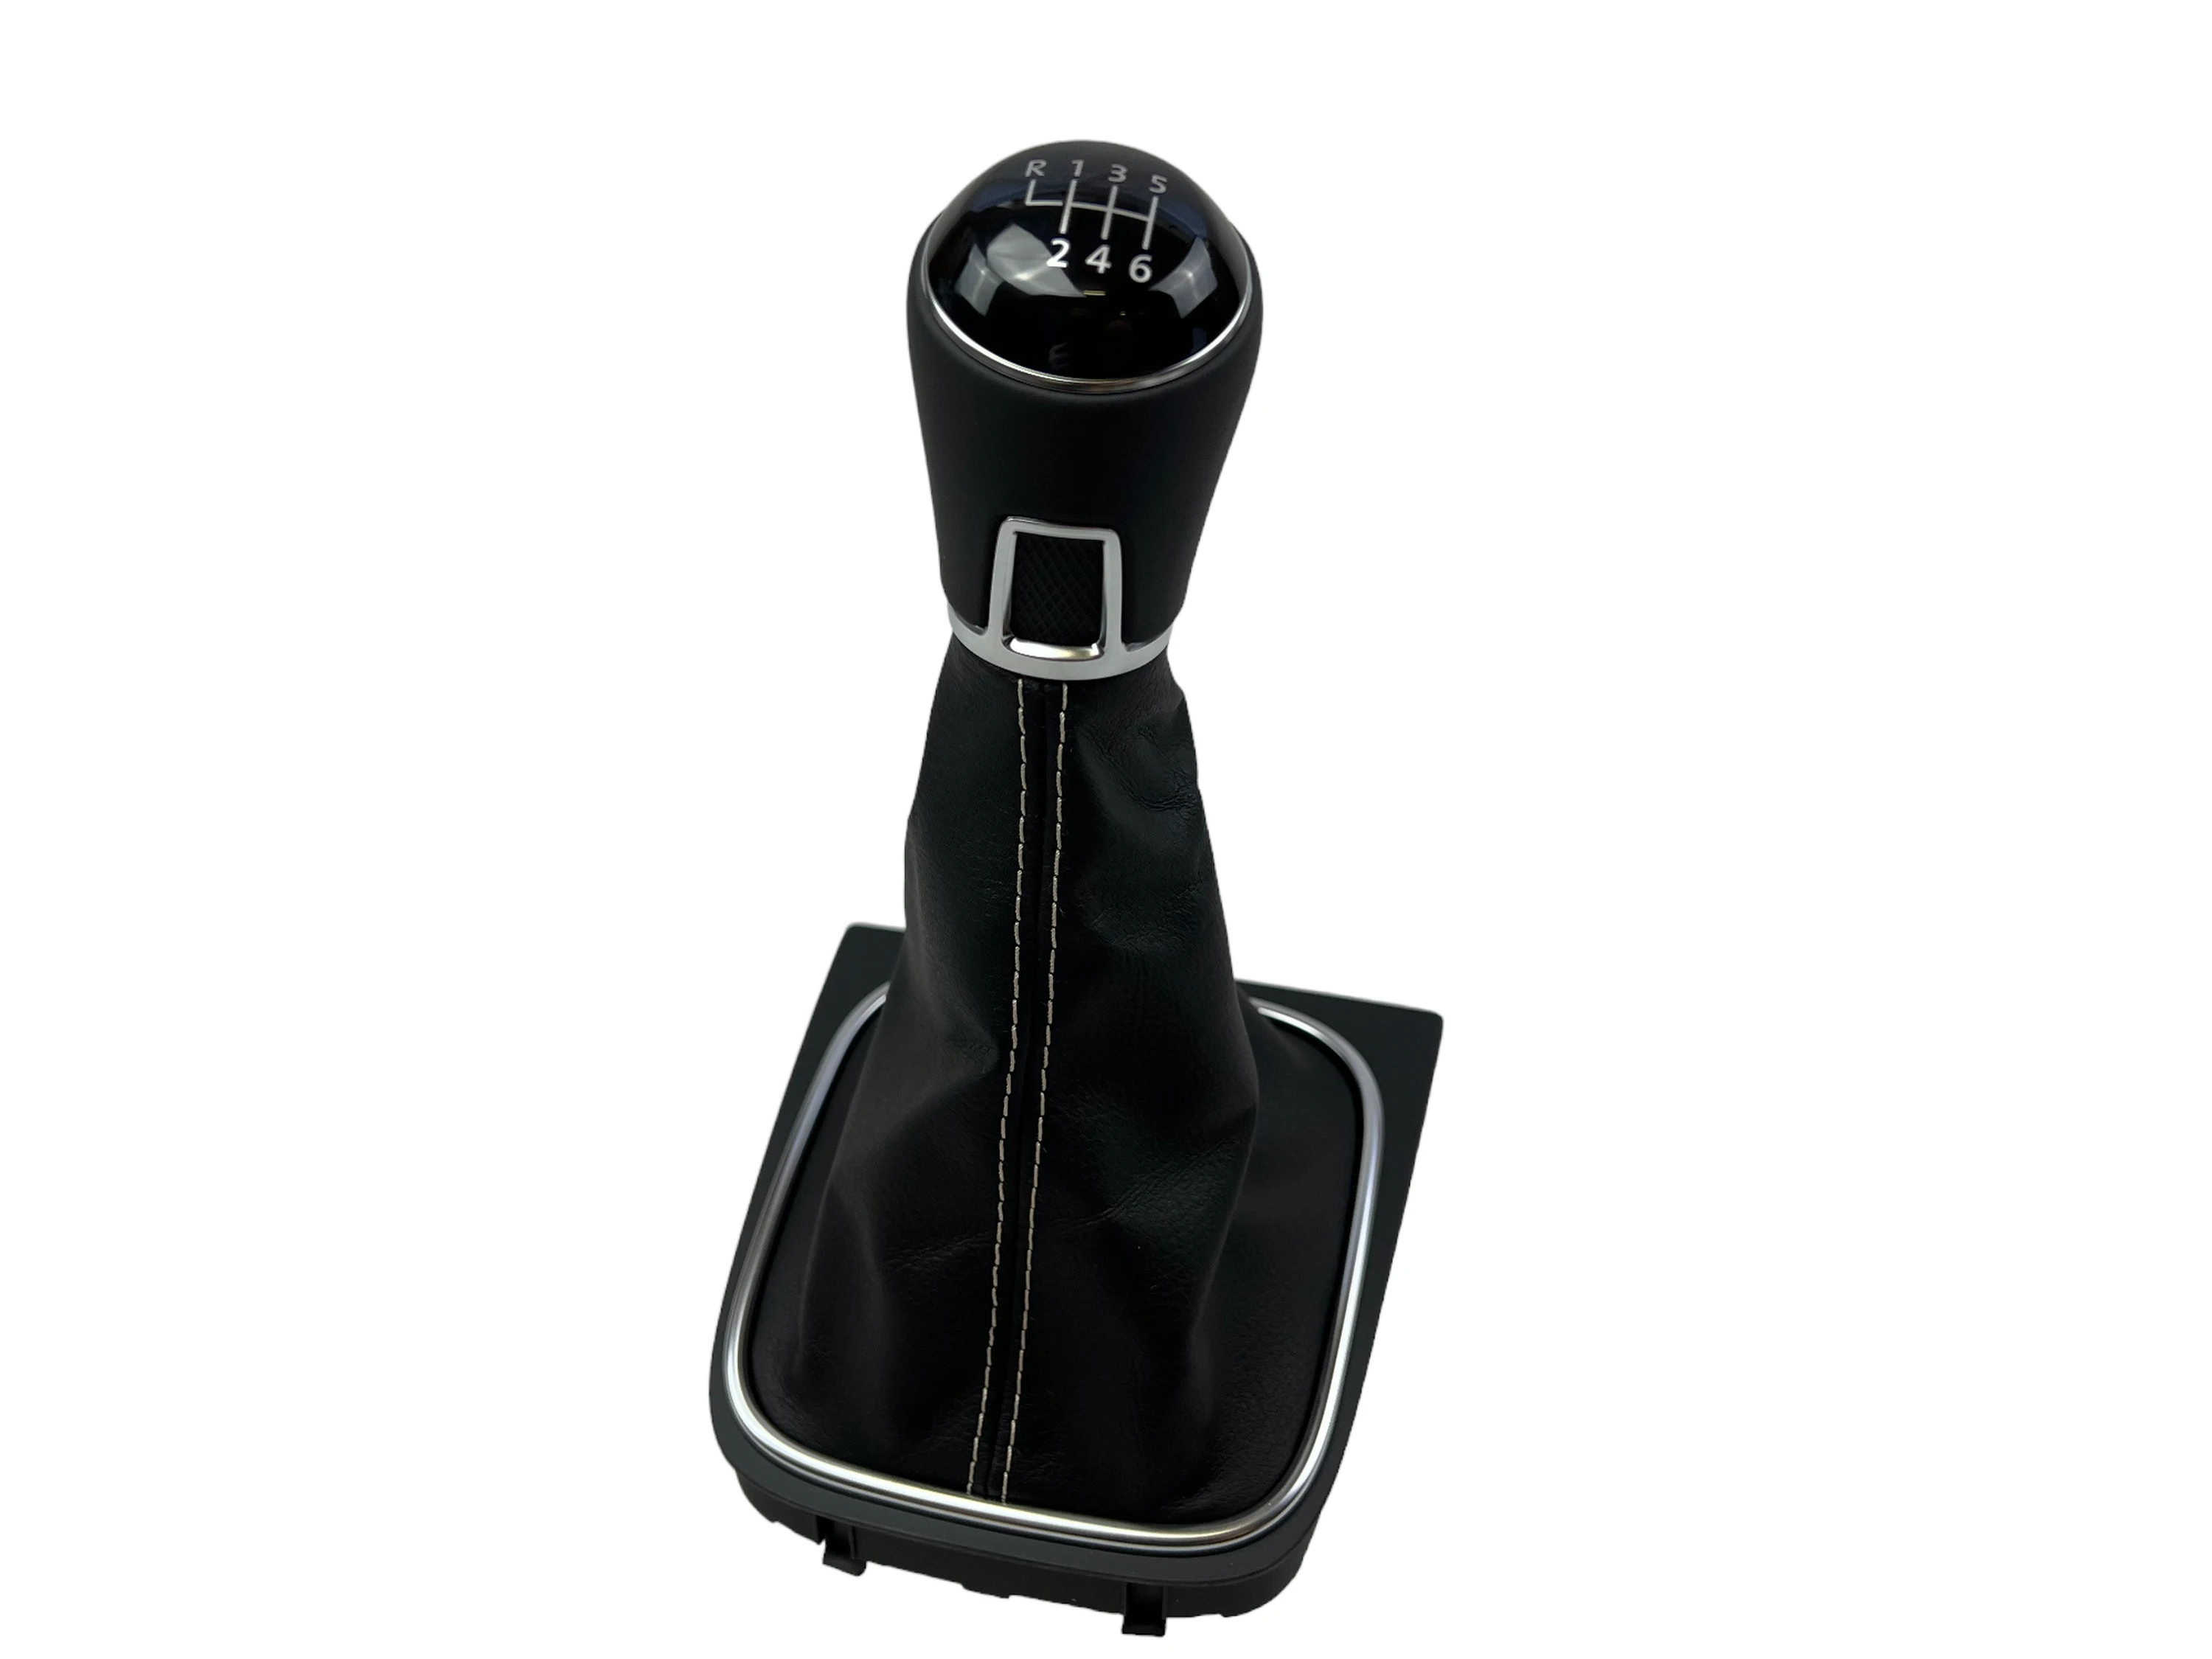 Schaltmanschette + Gear Knob for VW Touran + Caddy 2K III with